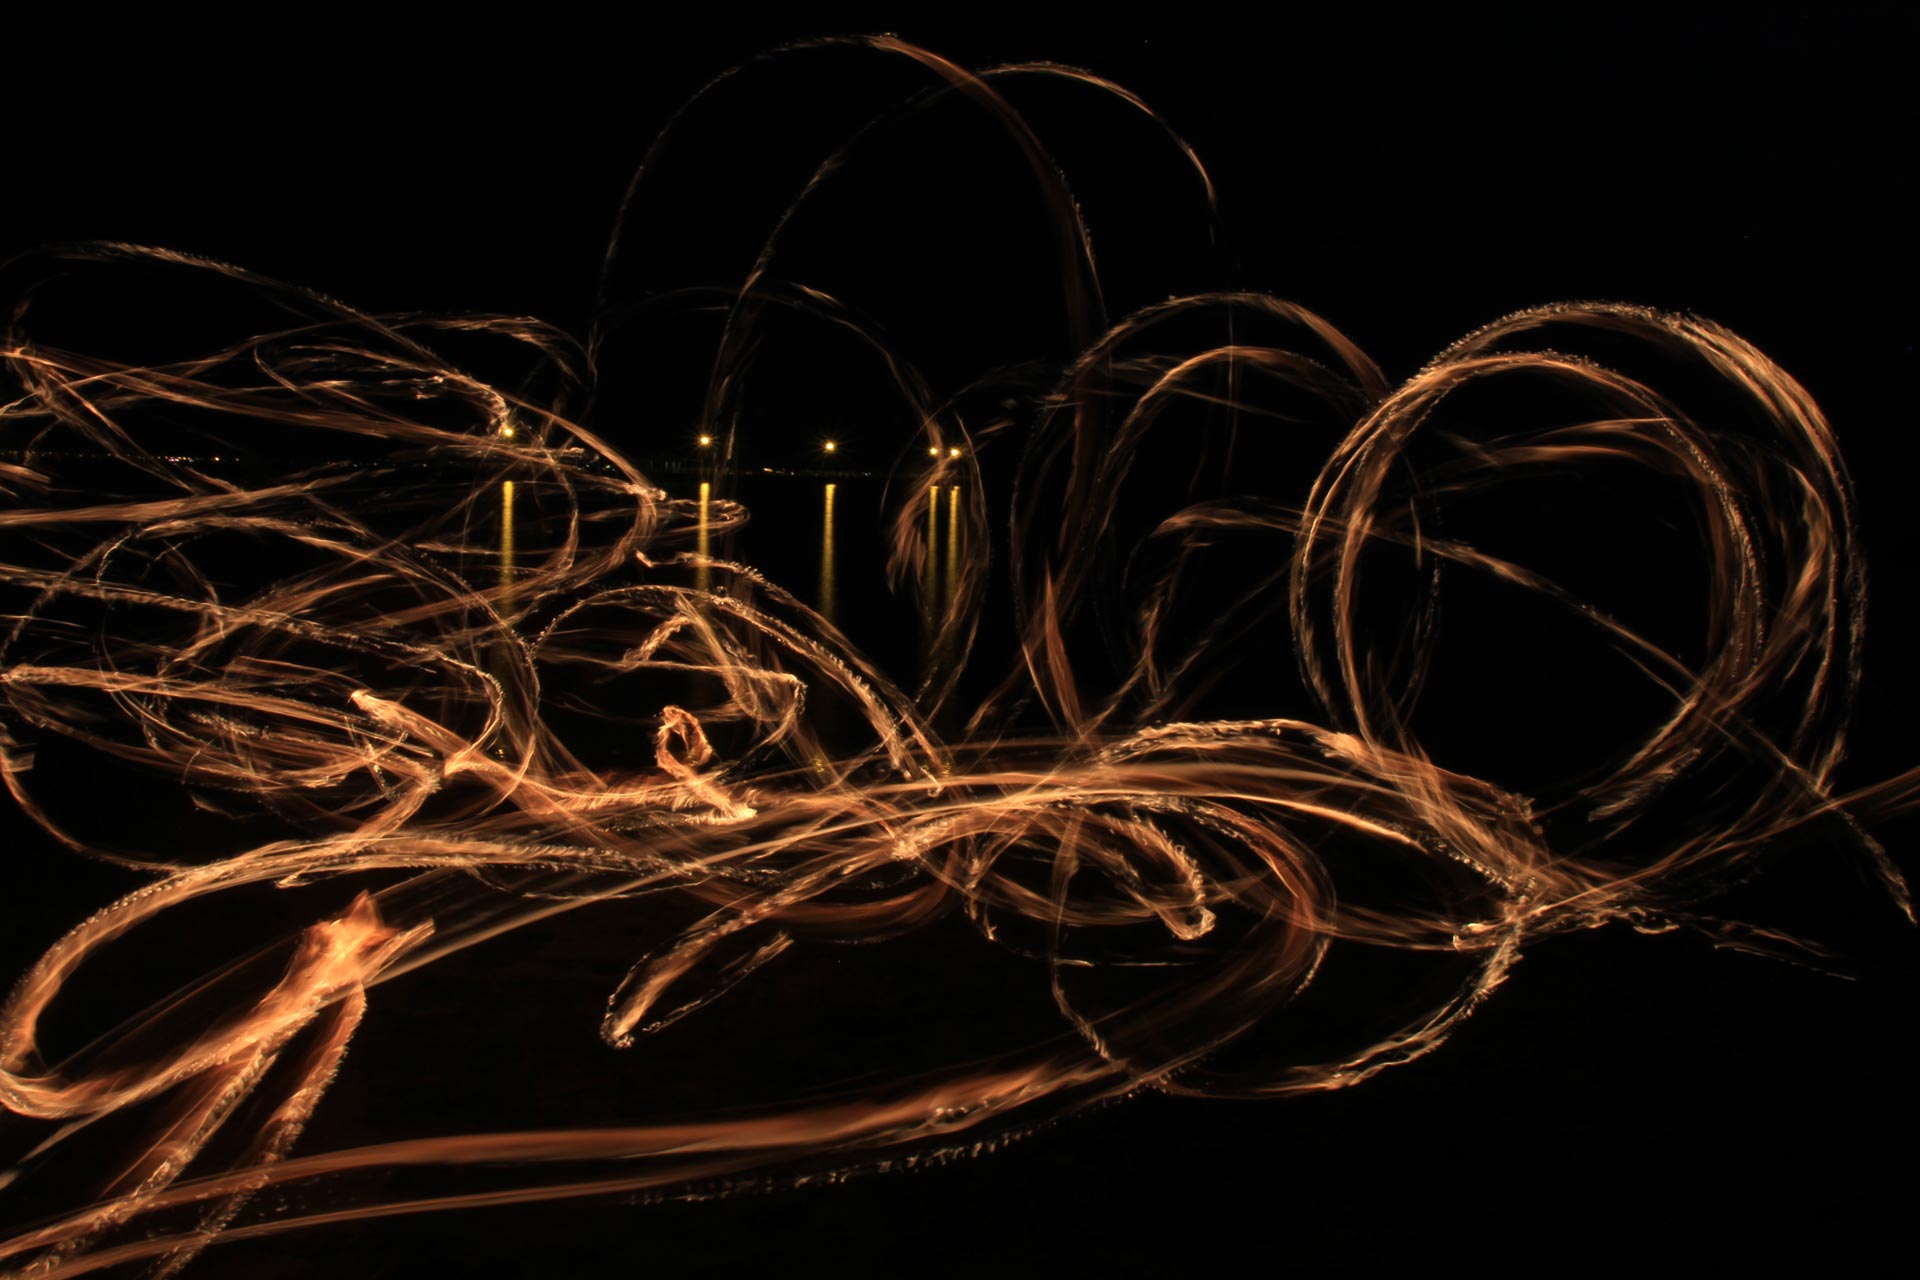 Crazed fire twirlers